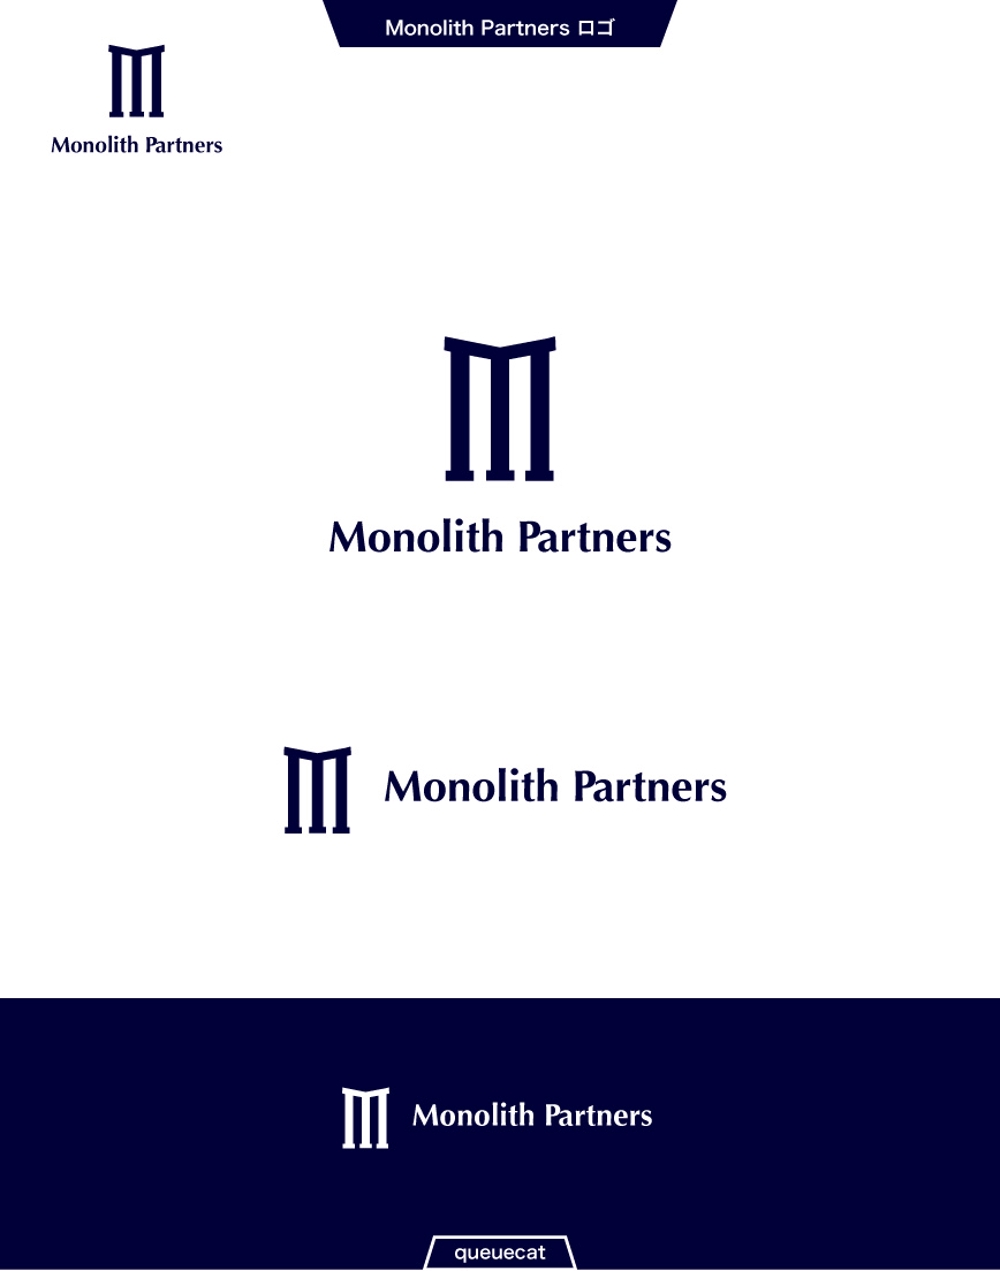 Monolith Partners2_1.jpg